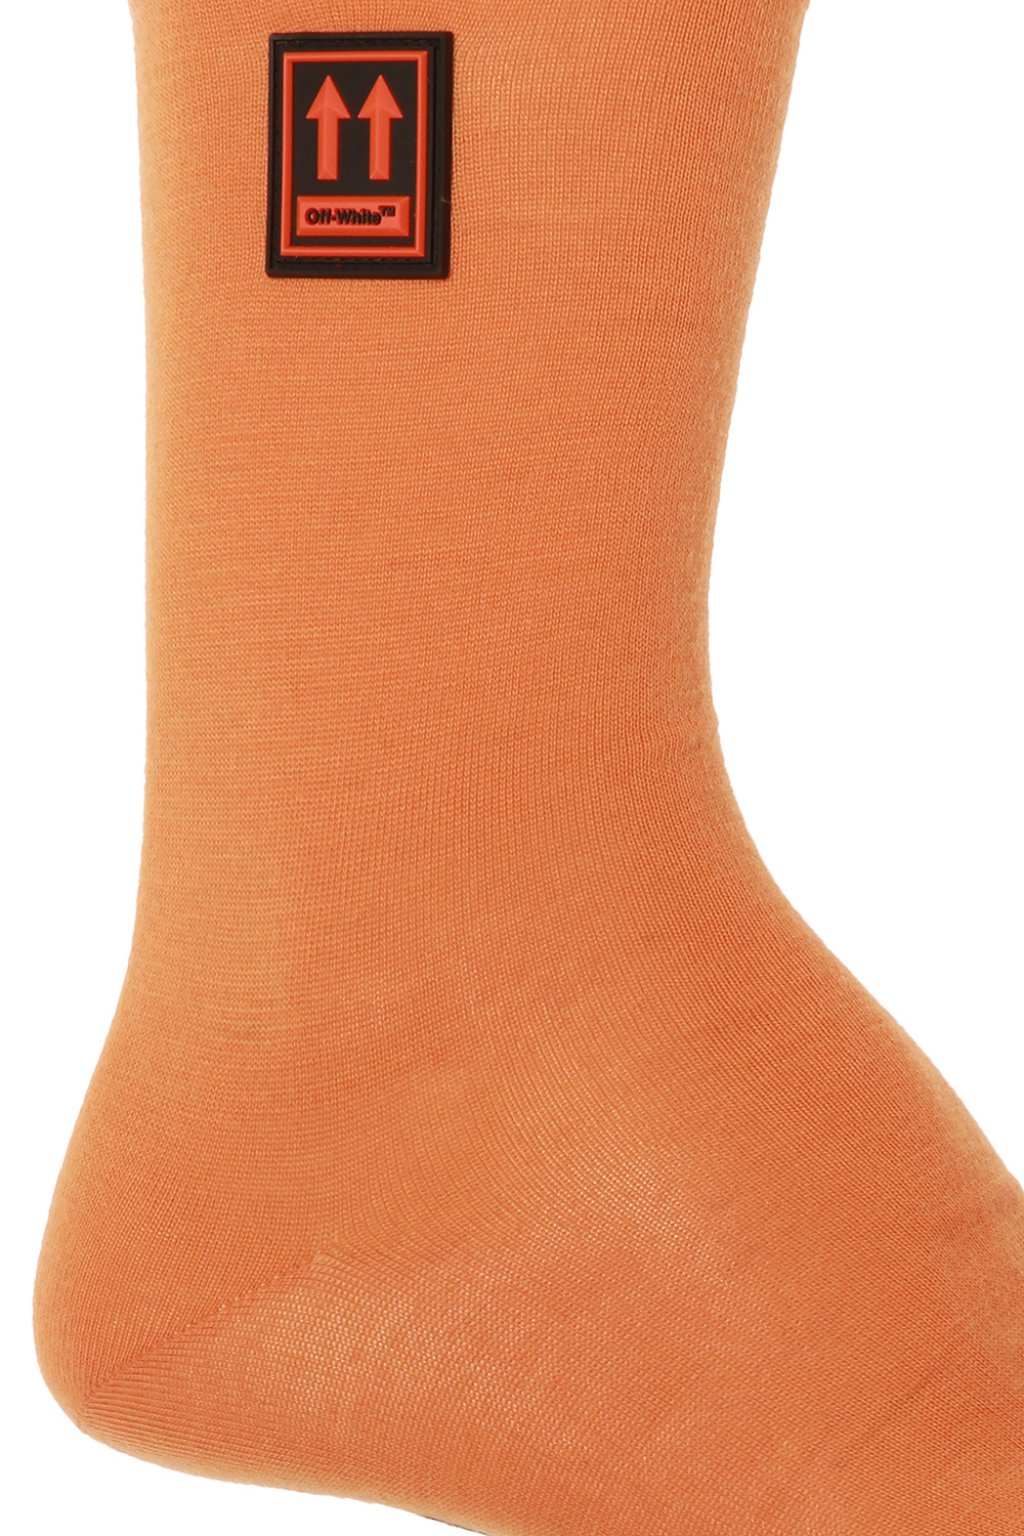 off white socks orange